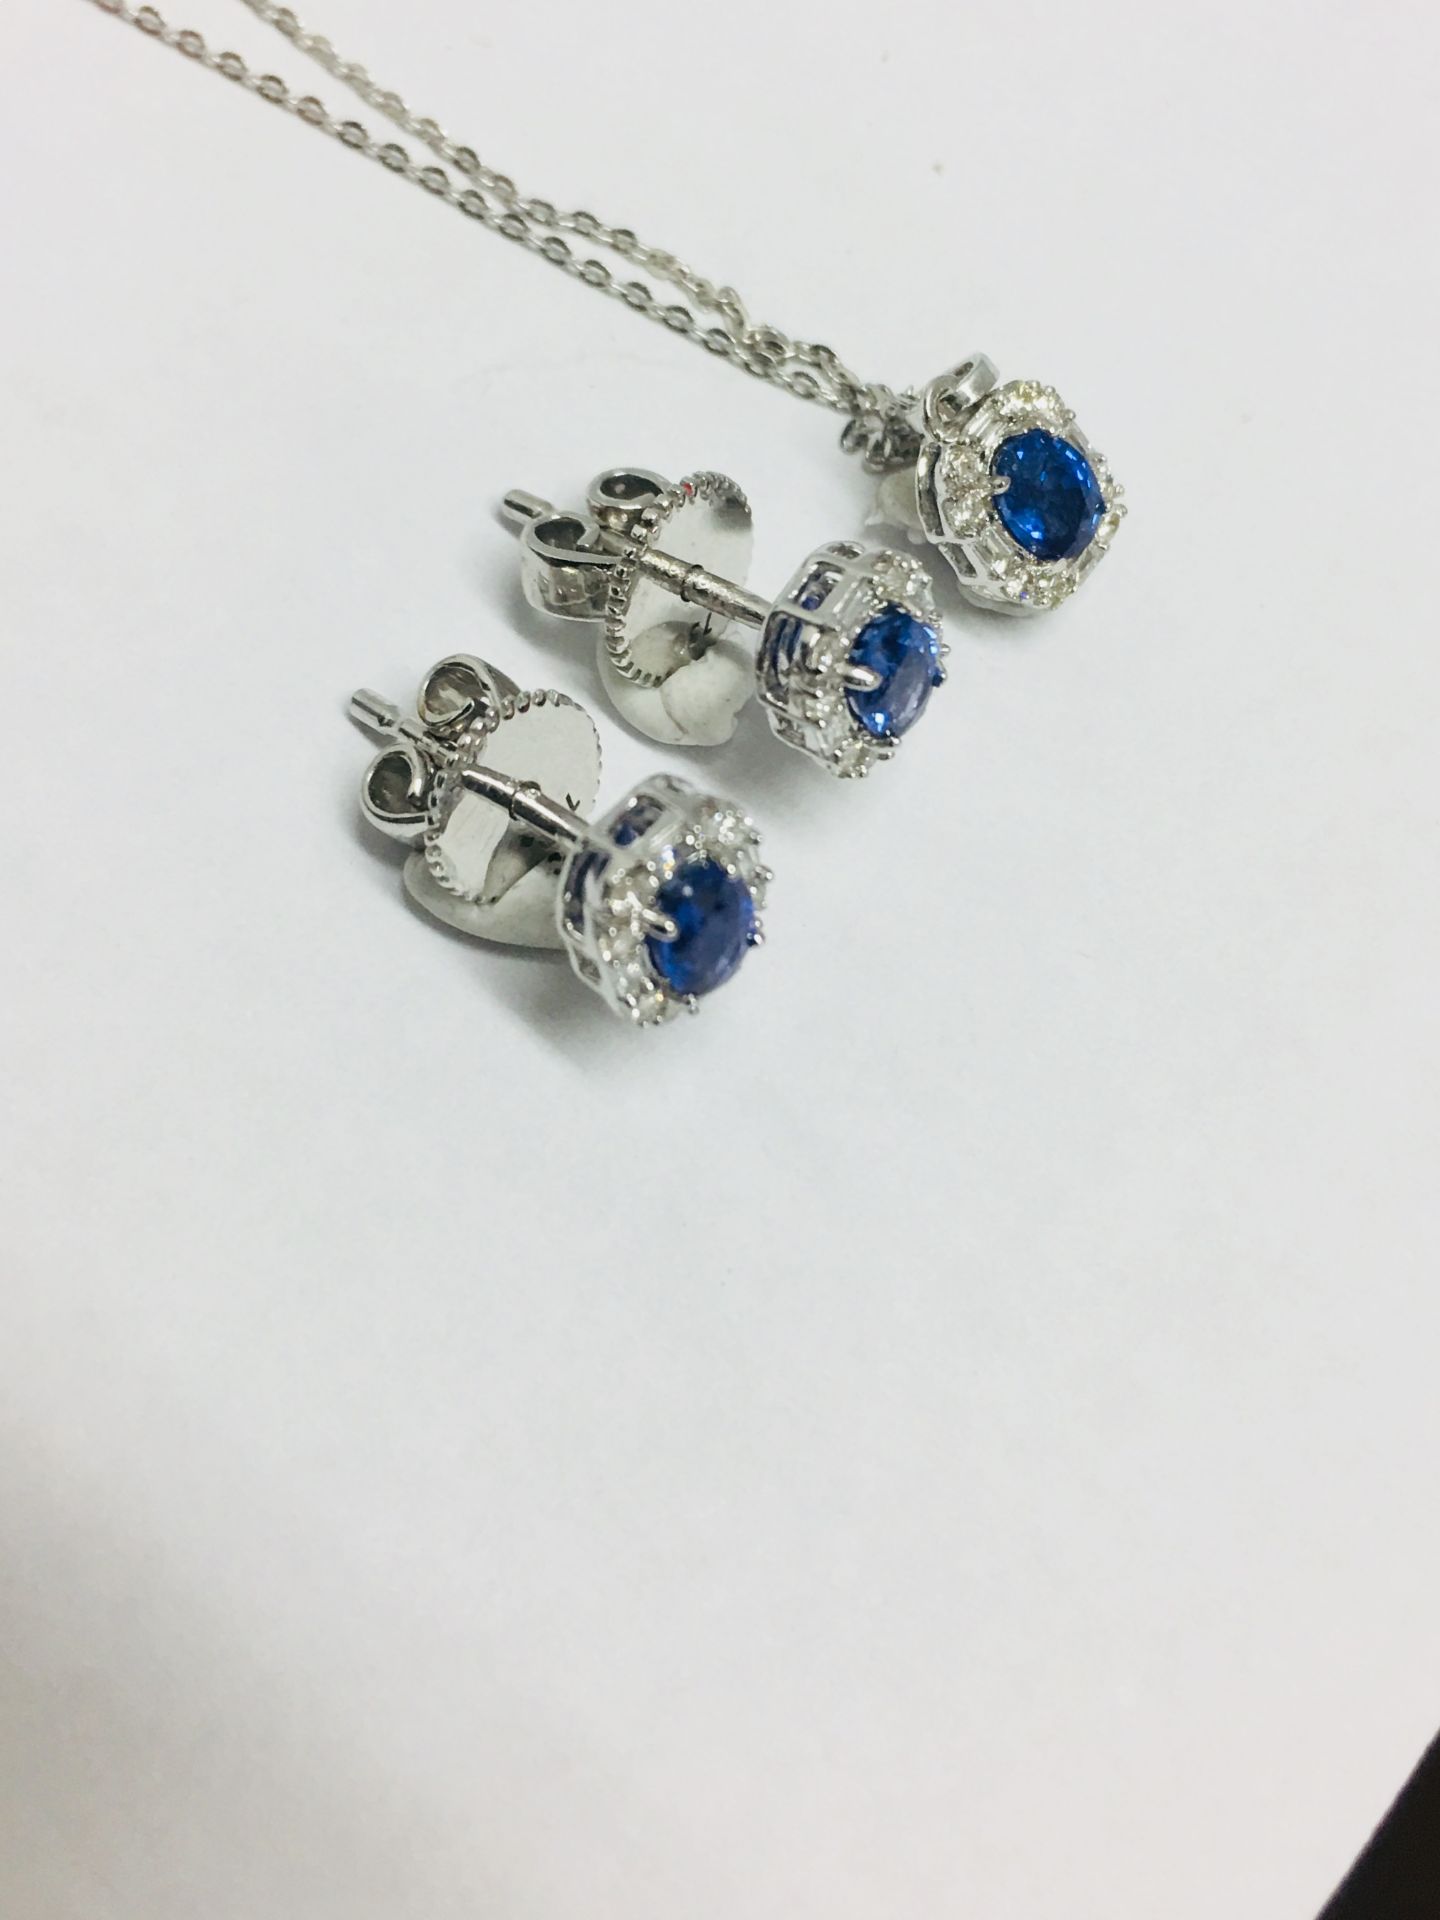 18ct Sapphire diamond Earrings and Pendant Set,0.78ct natural sapphire,0.24ct diamond brilliant - Image 4 of 5